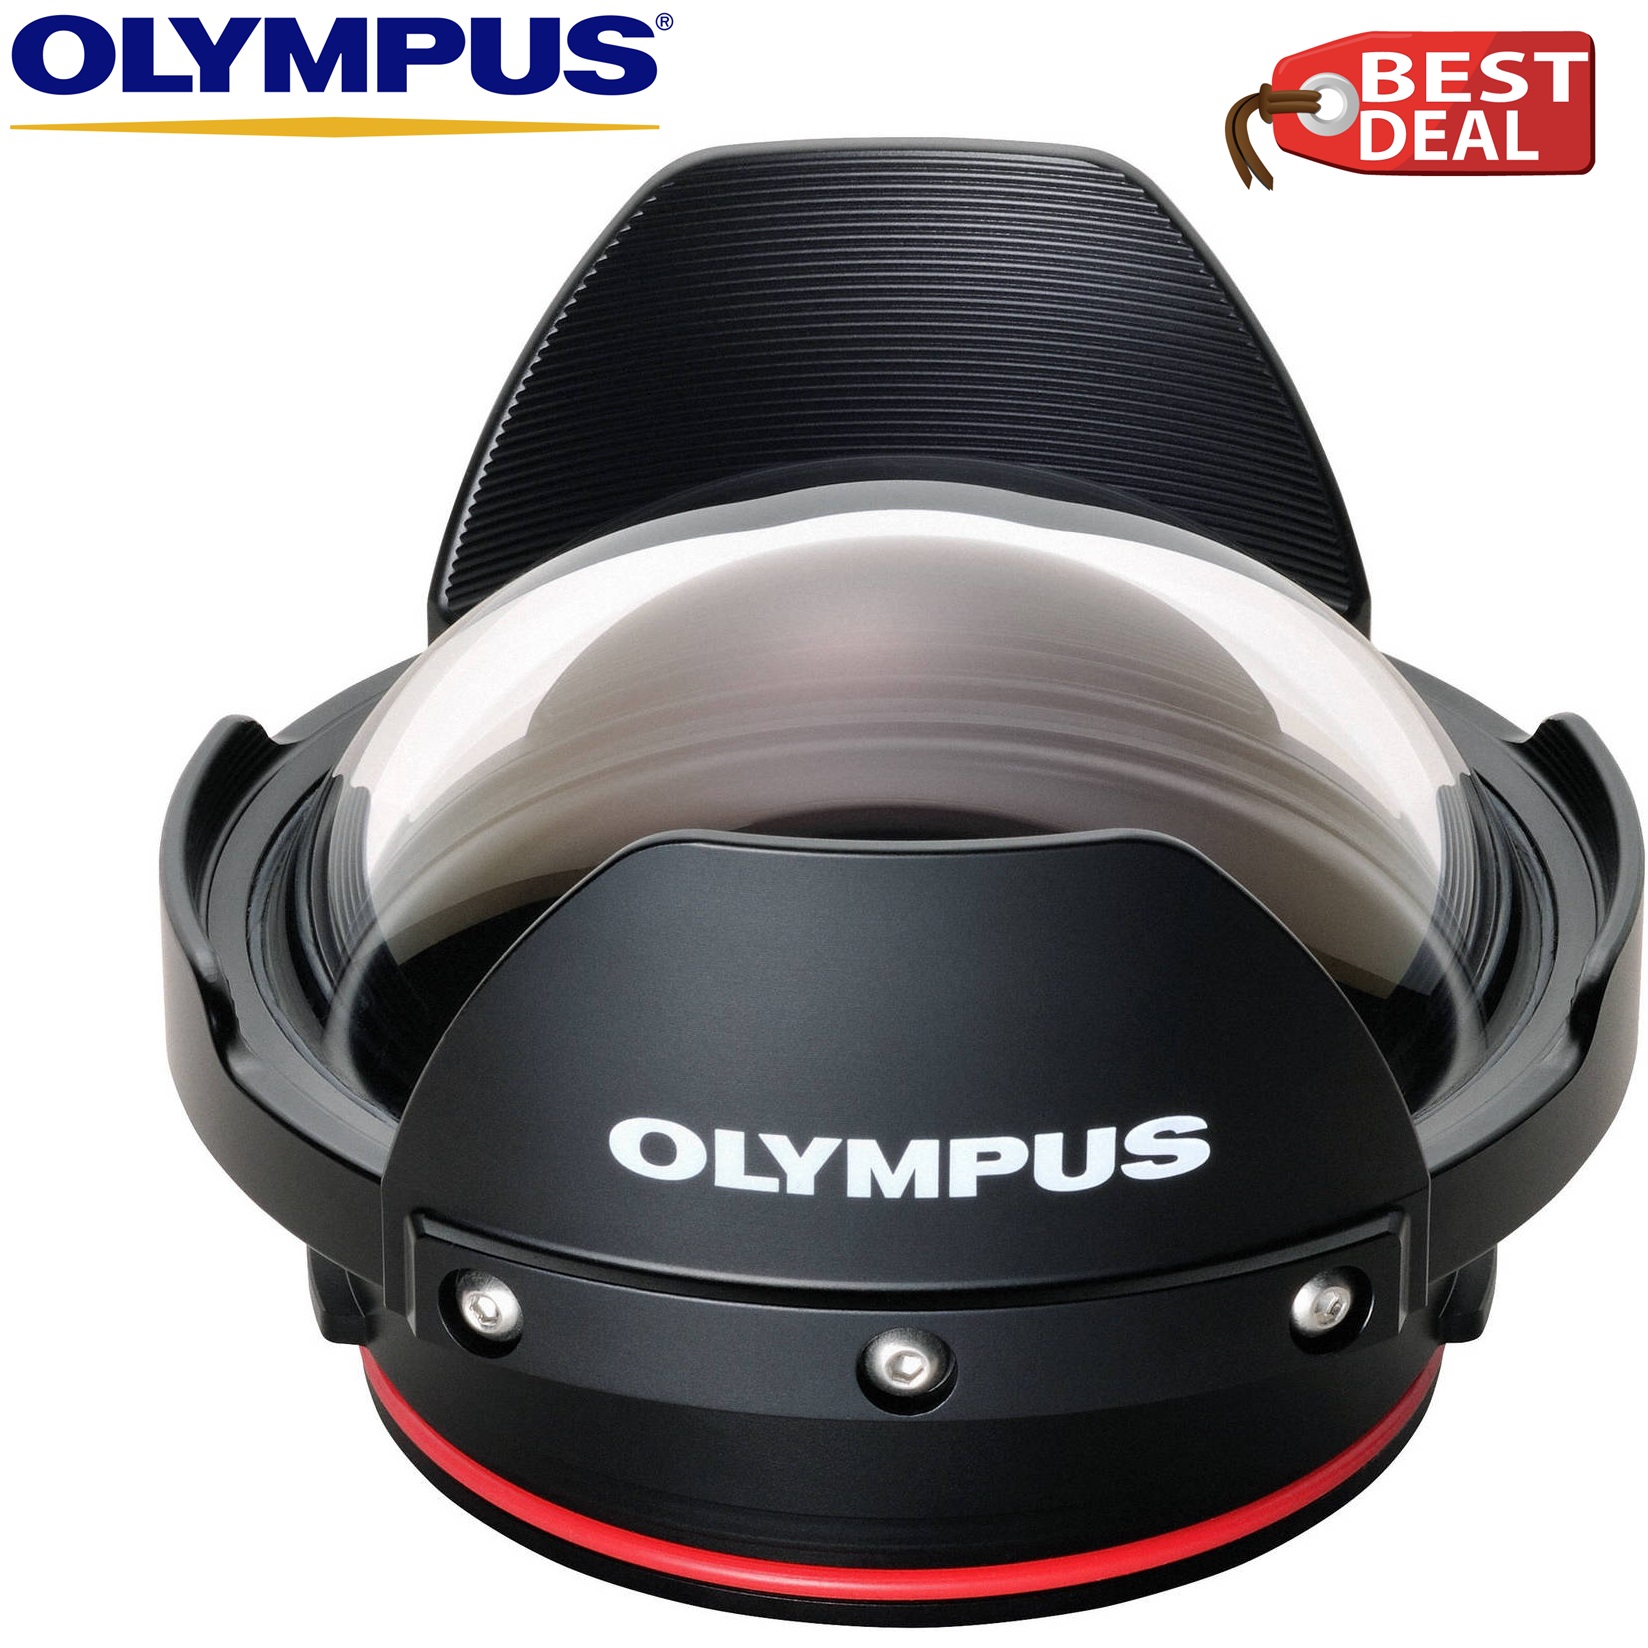 Olympus PPO-EP02 Dome Port for Select M.ZUIKO Digital Lenses